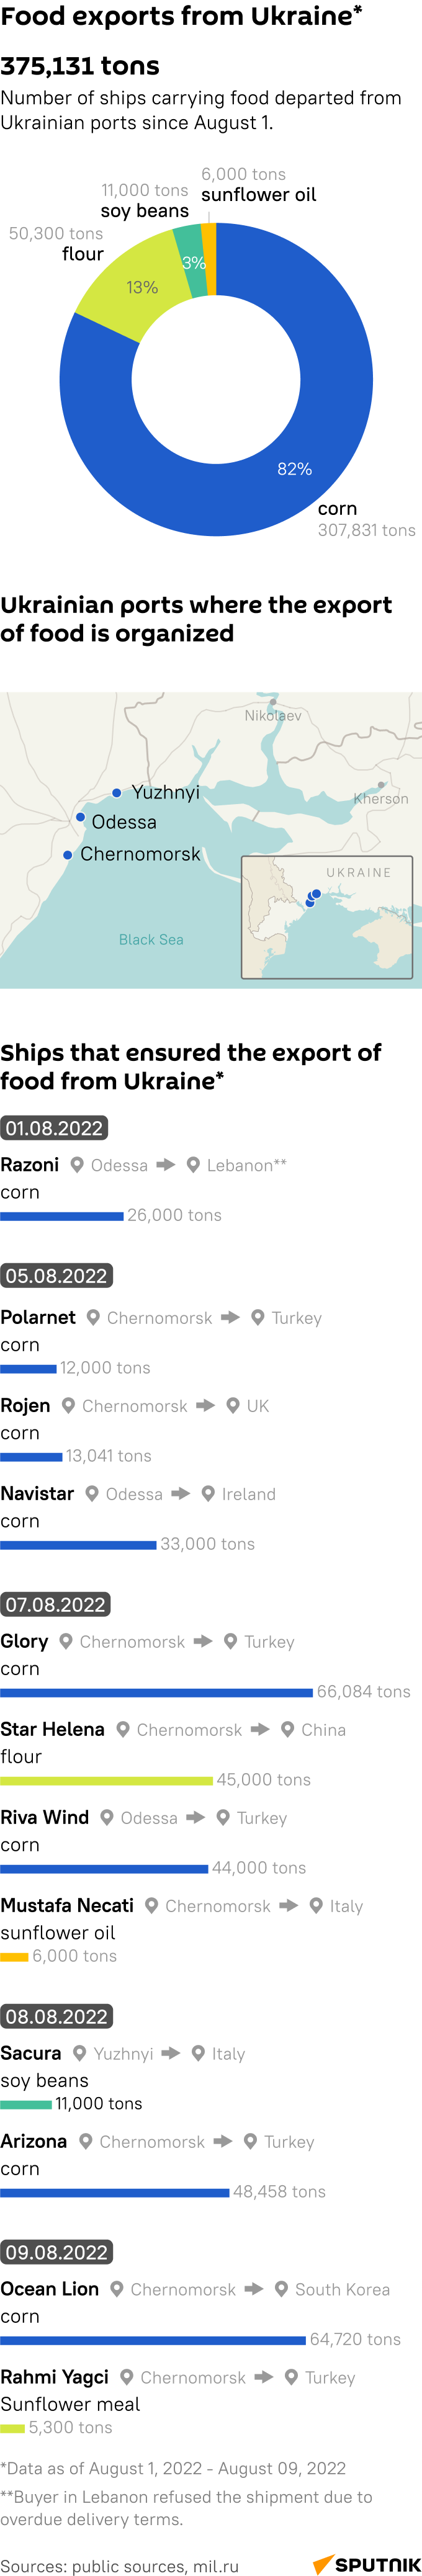 Food exports from Ukraine infographics - Sputnik International